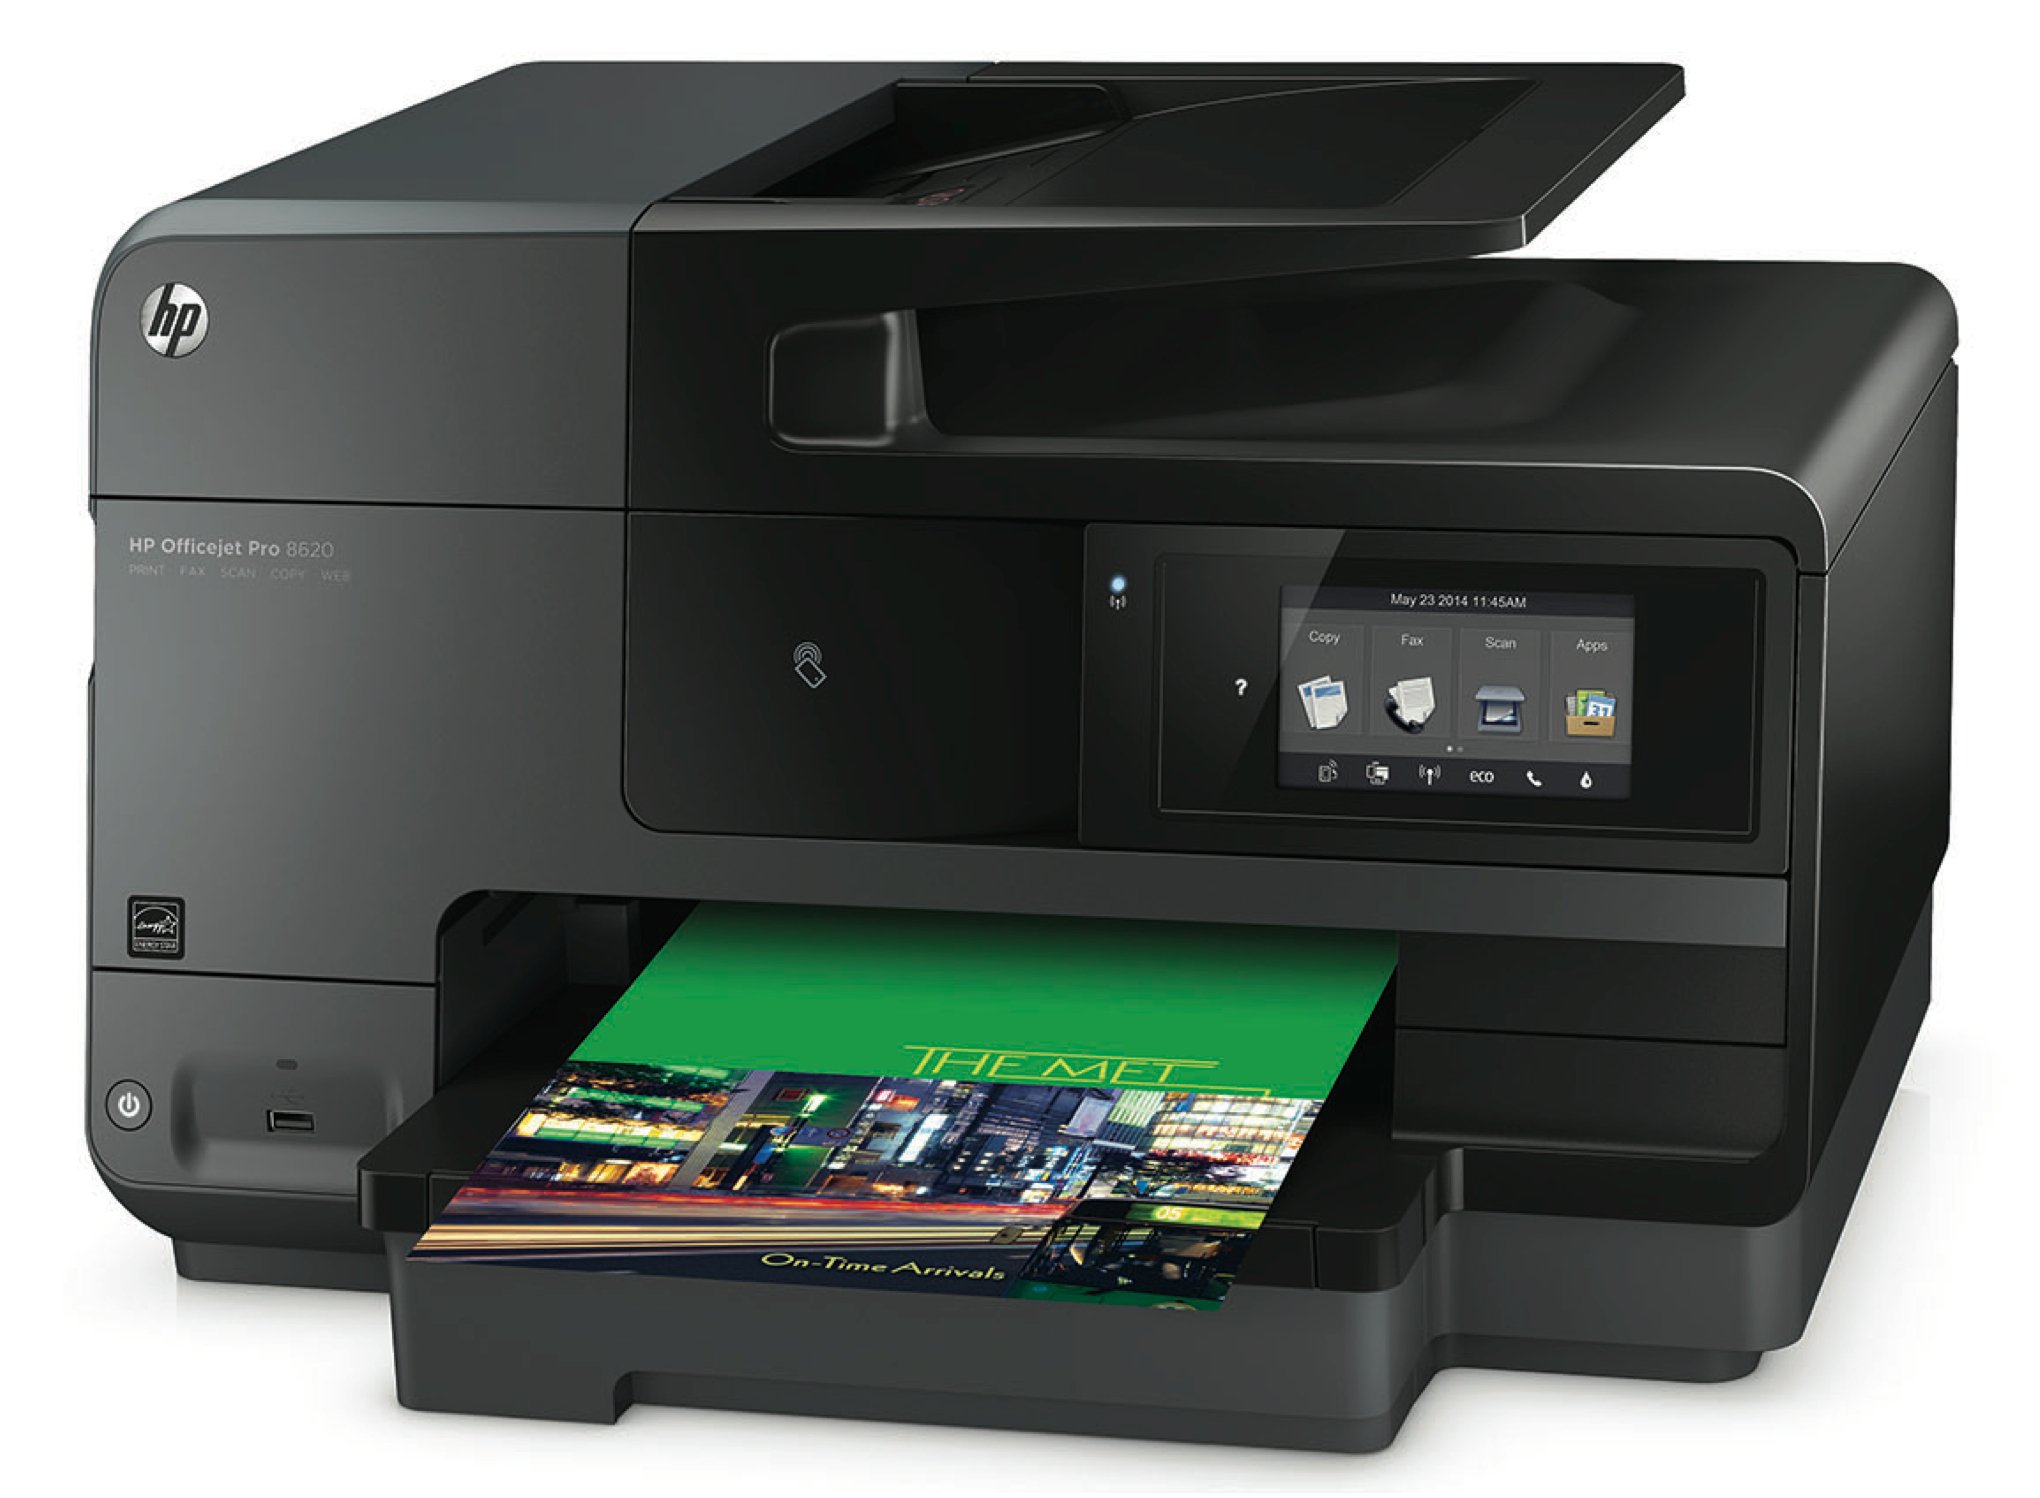 HP Officejet Pro 8620 im Test: Drucker, Scanner, Fax & Kopierer für Büro & Zuhause 6